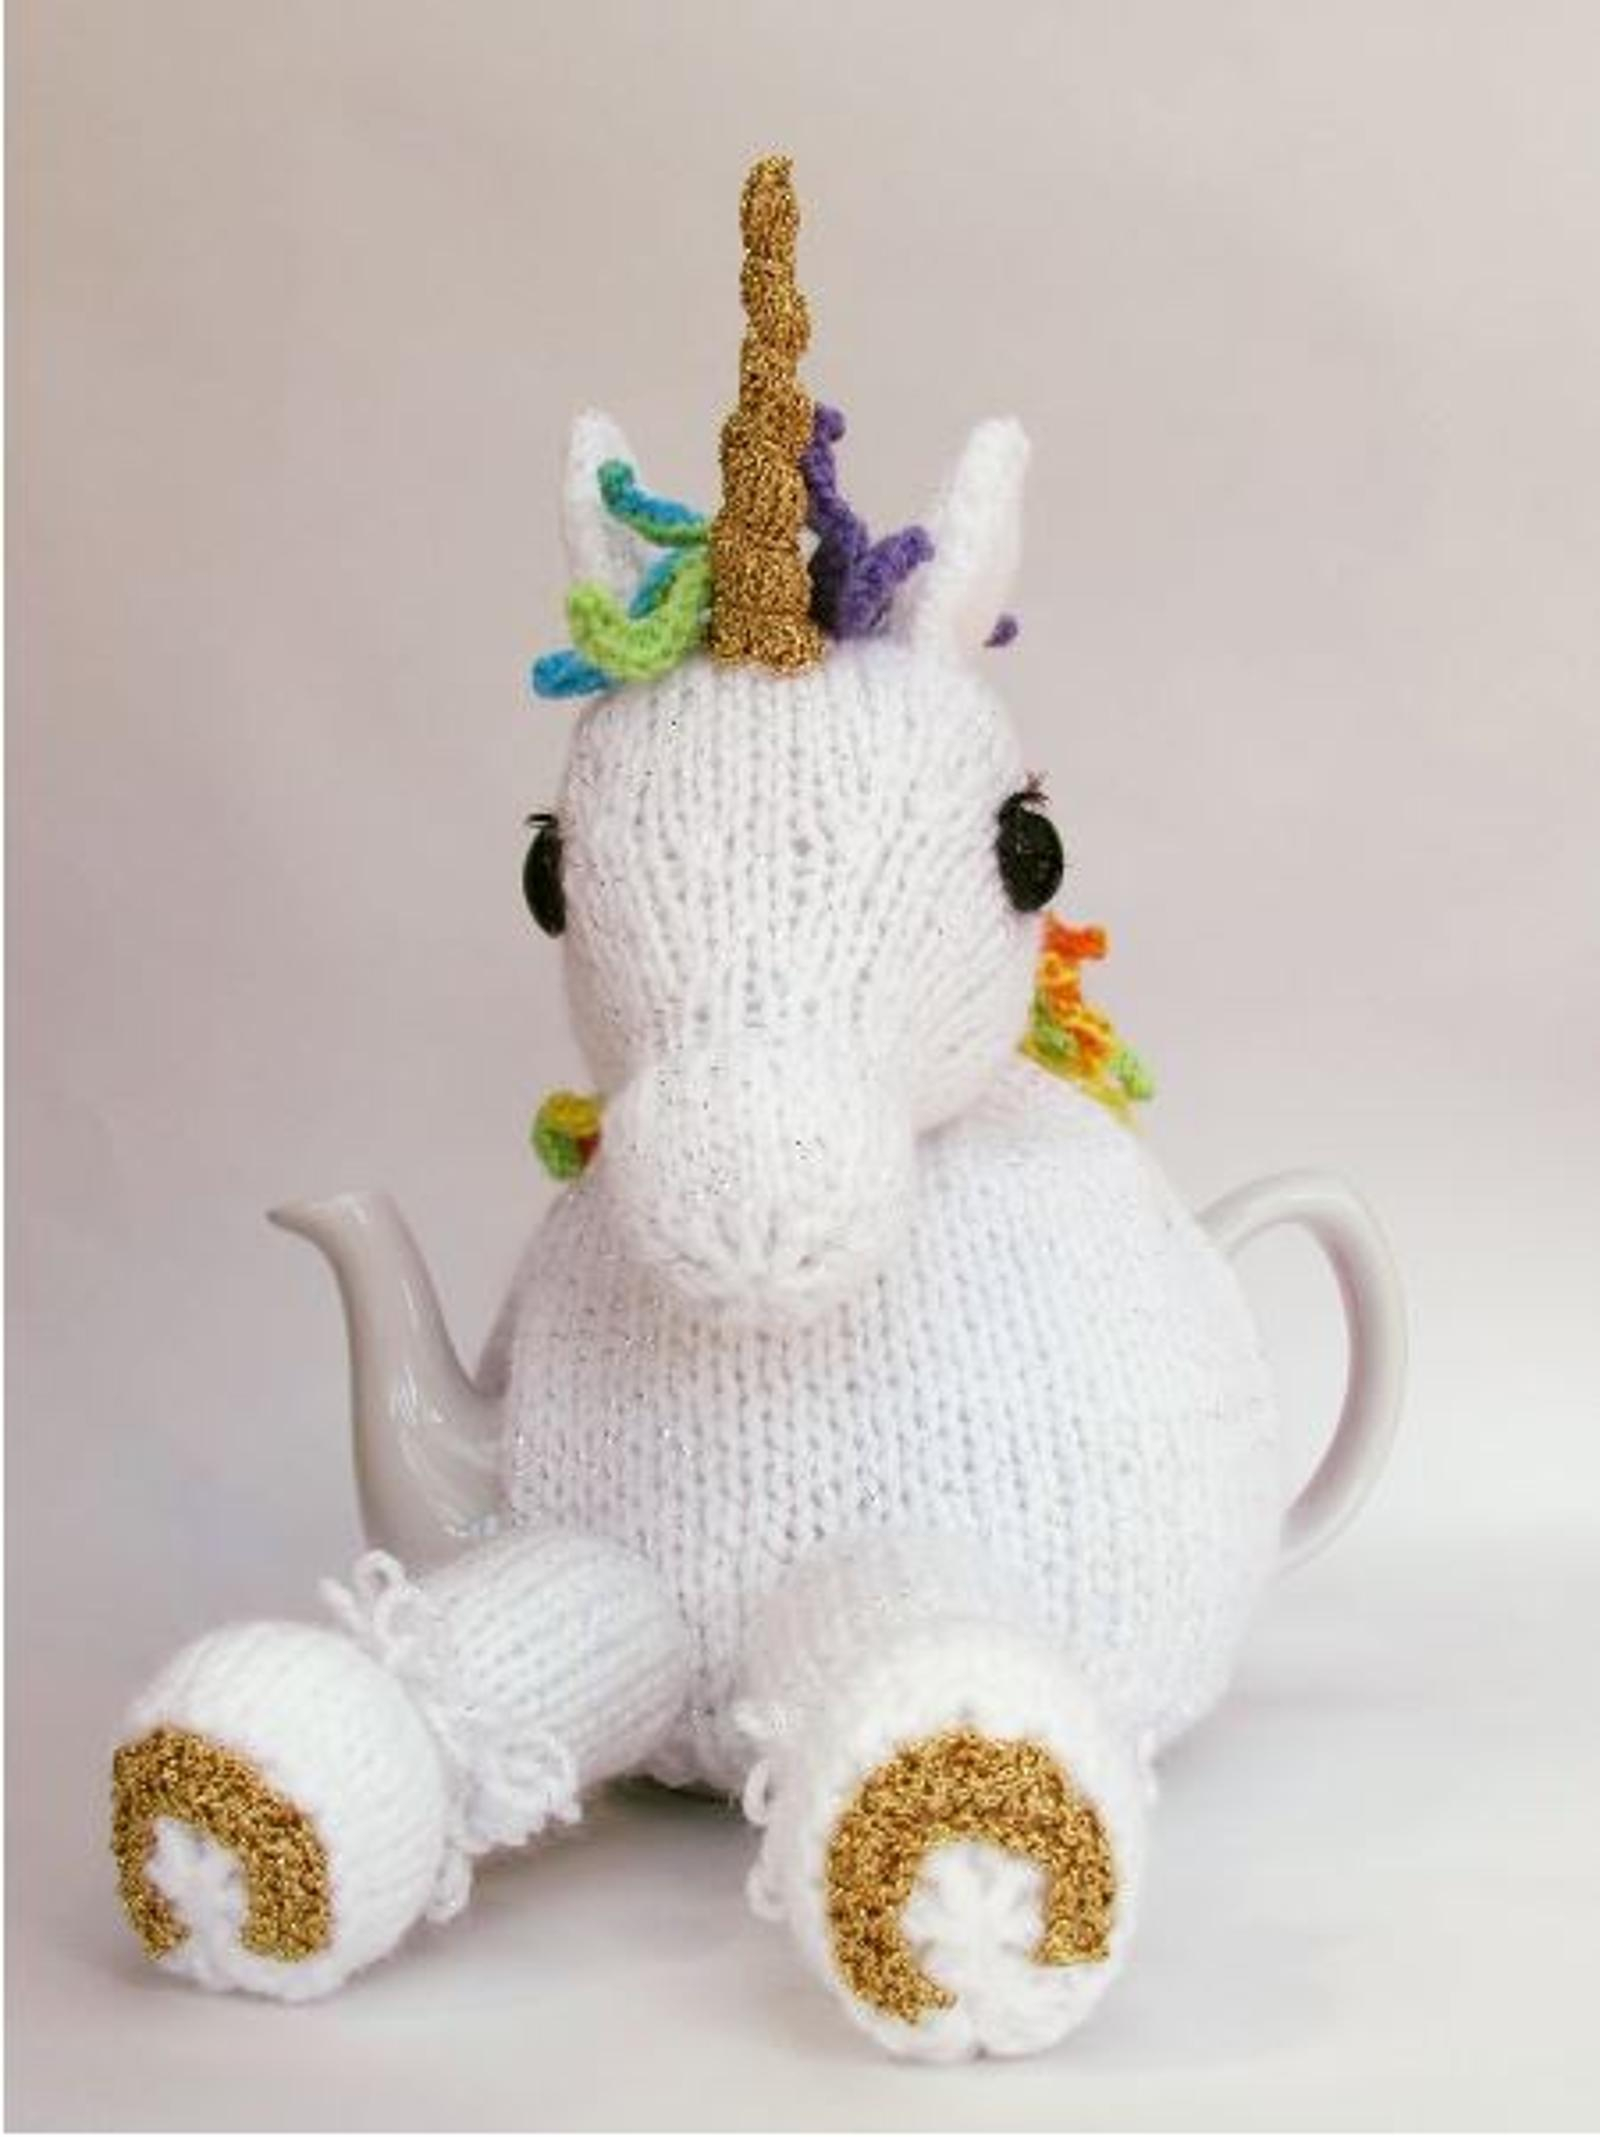 Knitting Patterns For Toys Uk Unicorn Knitting Patterns 12 Magical Unicorn Patterns To Knit